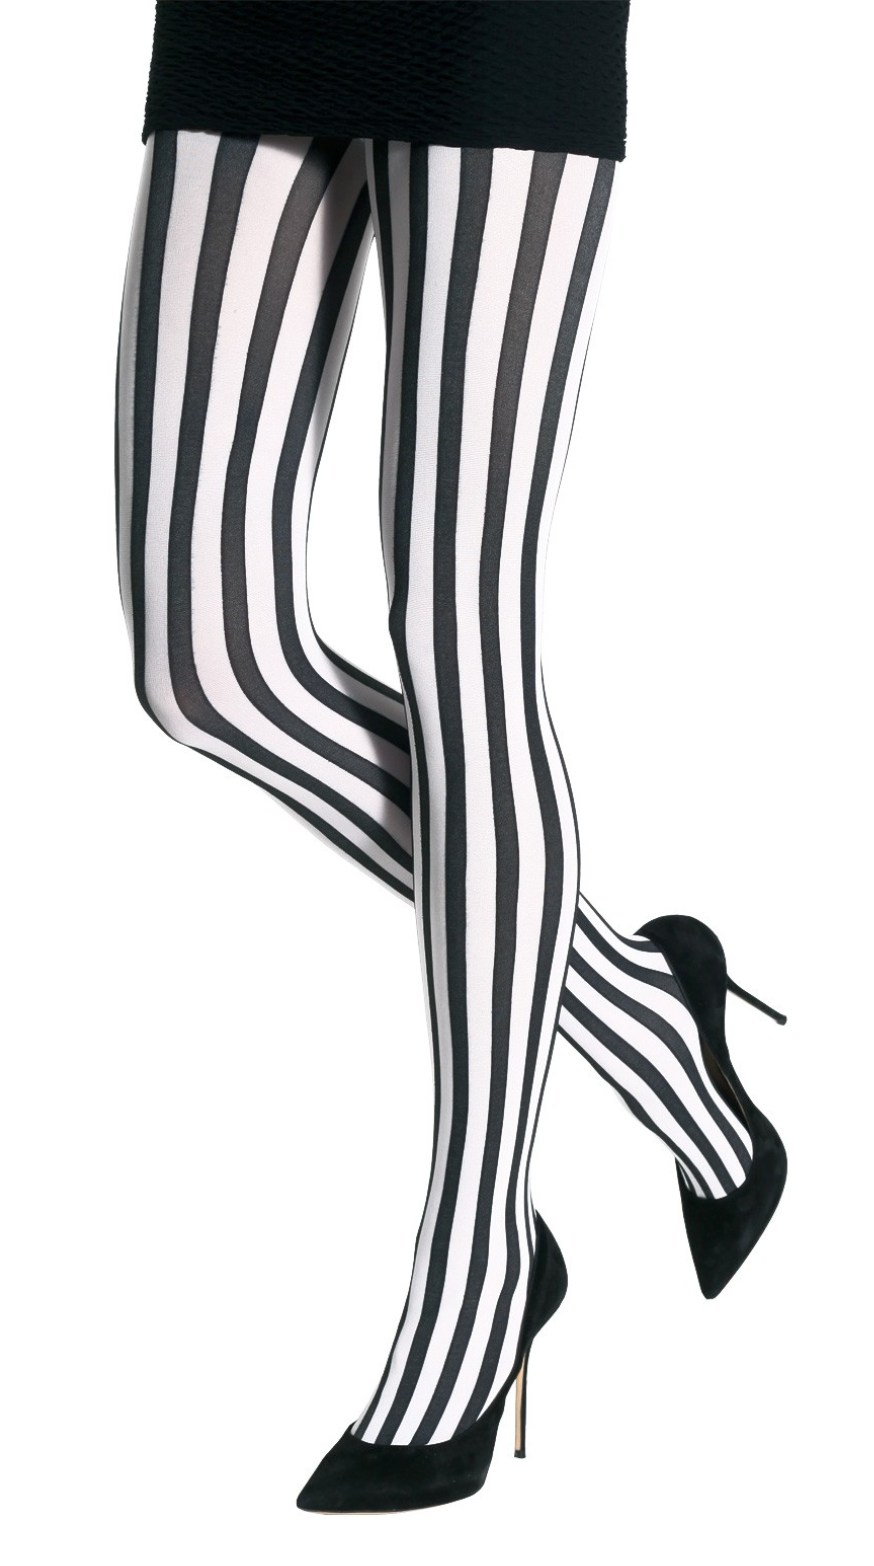 Emilio Cavallini Two Toned Vertical Stripes Tights - black and white striped tights